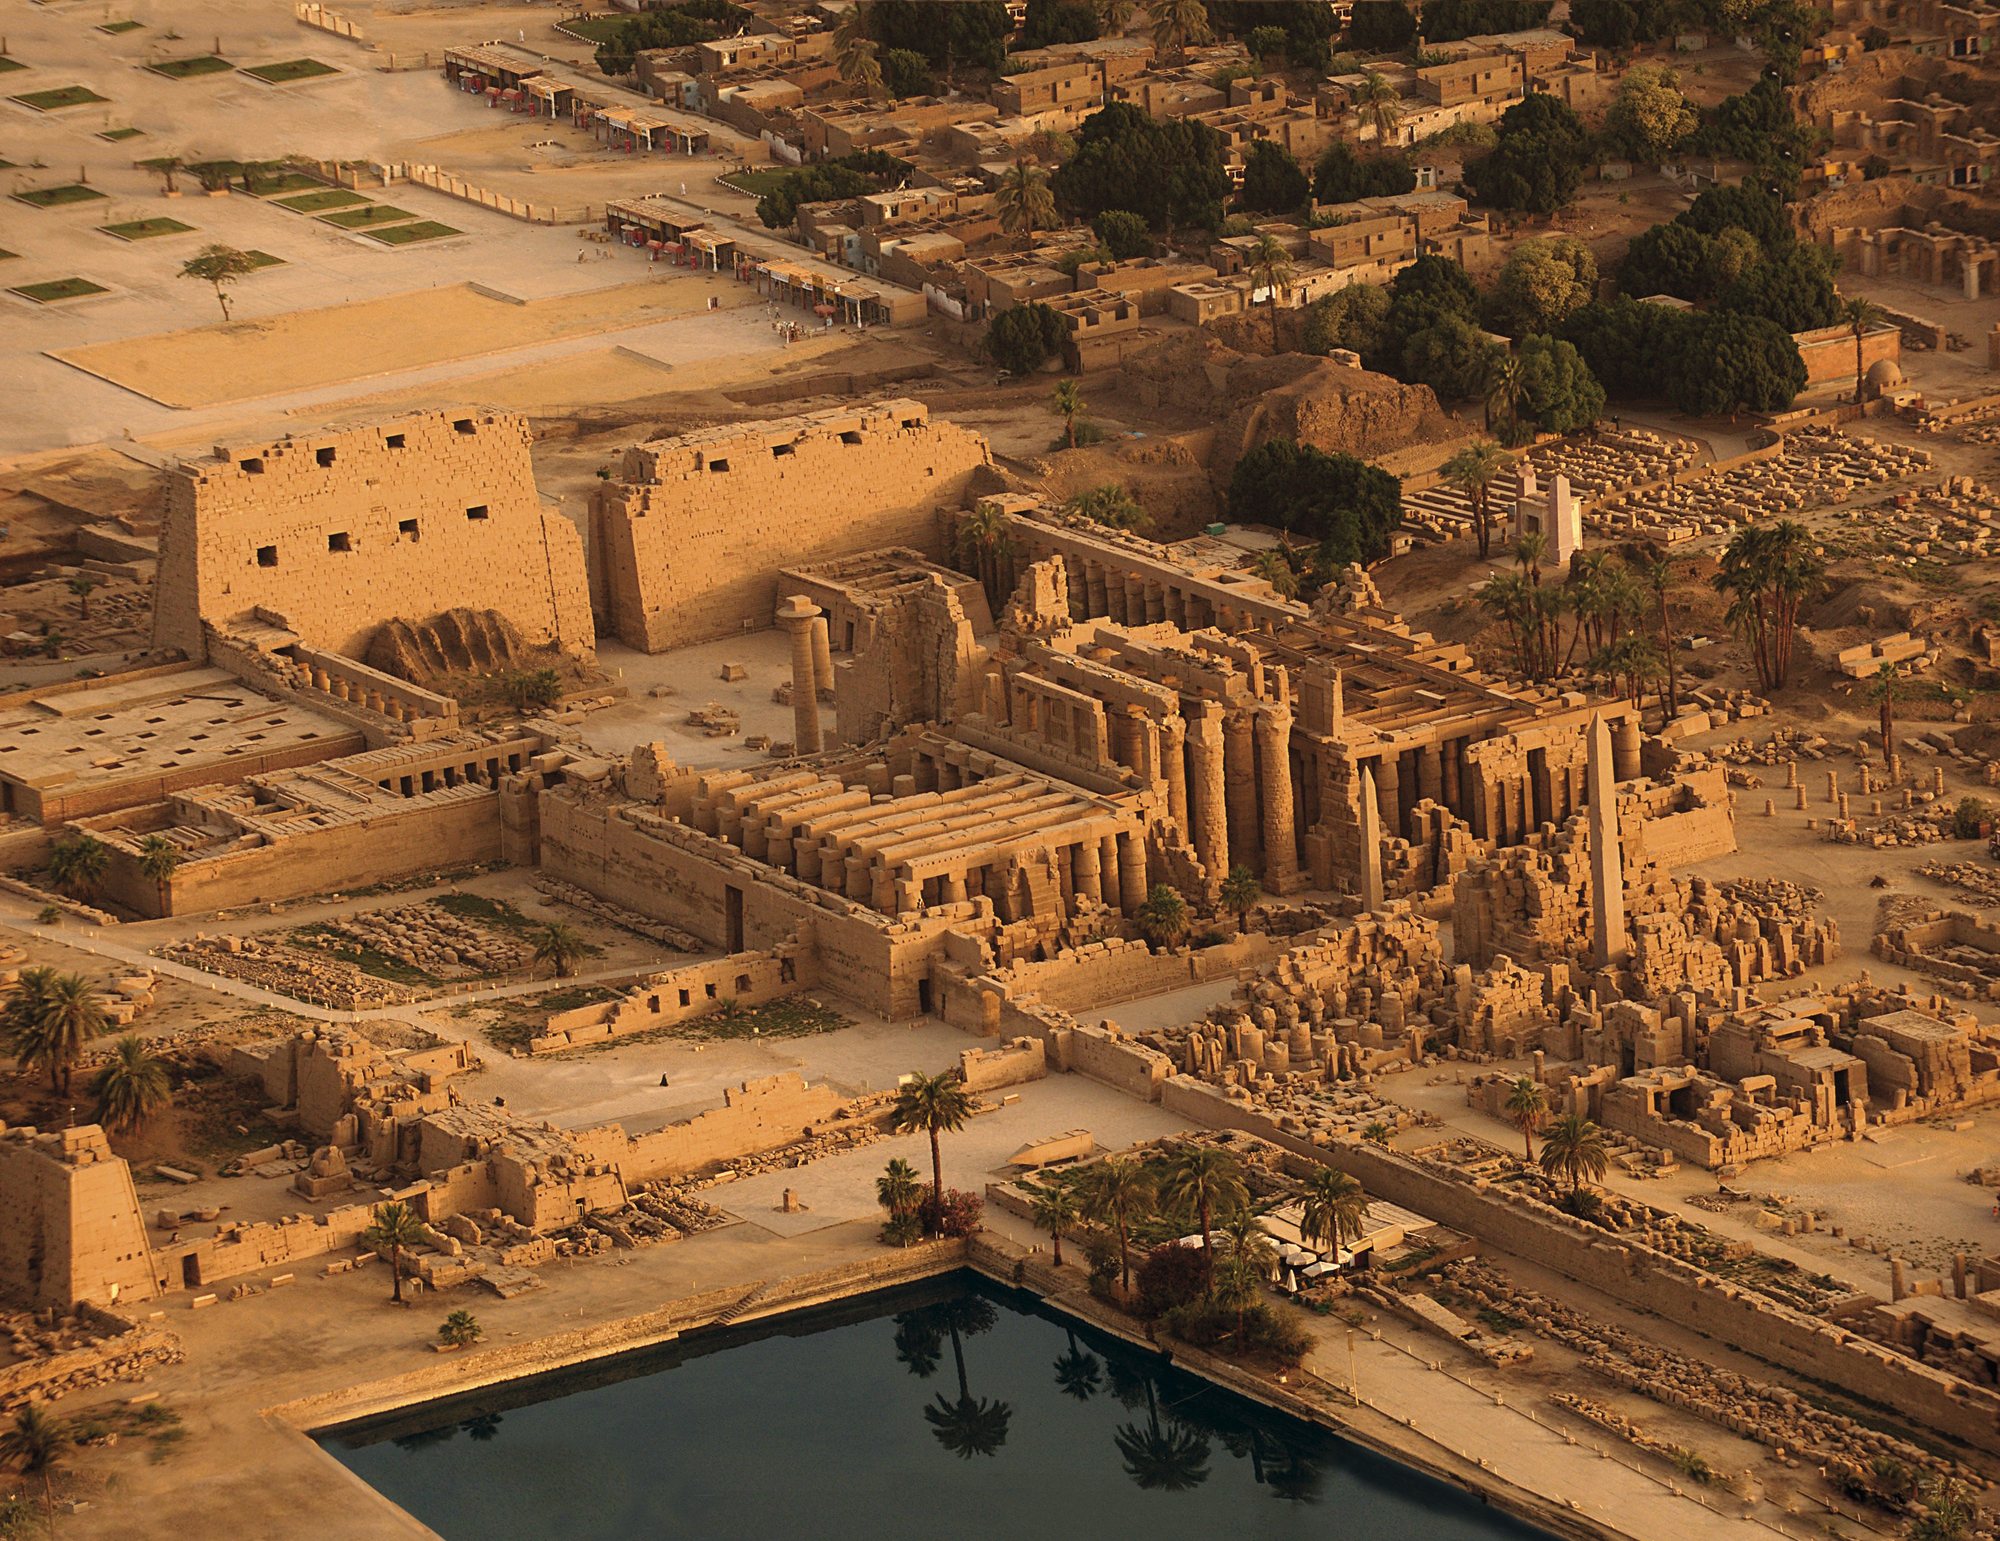 95282Karnak-Temple-Overview-Luxor-Tourist-Attractions-Egypt-Tours-Portal.jpg